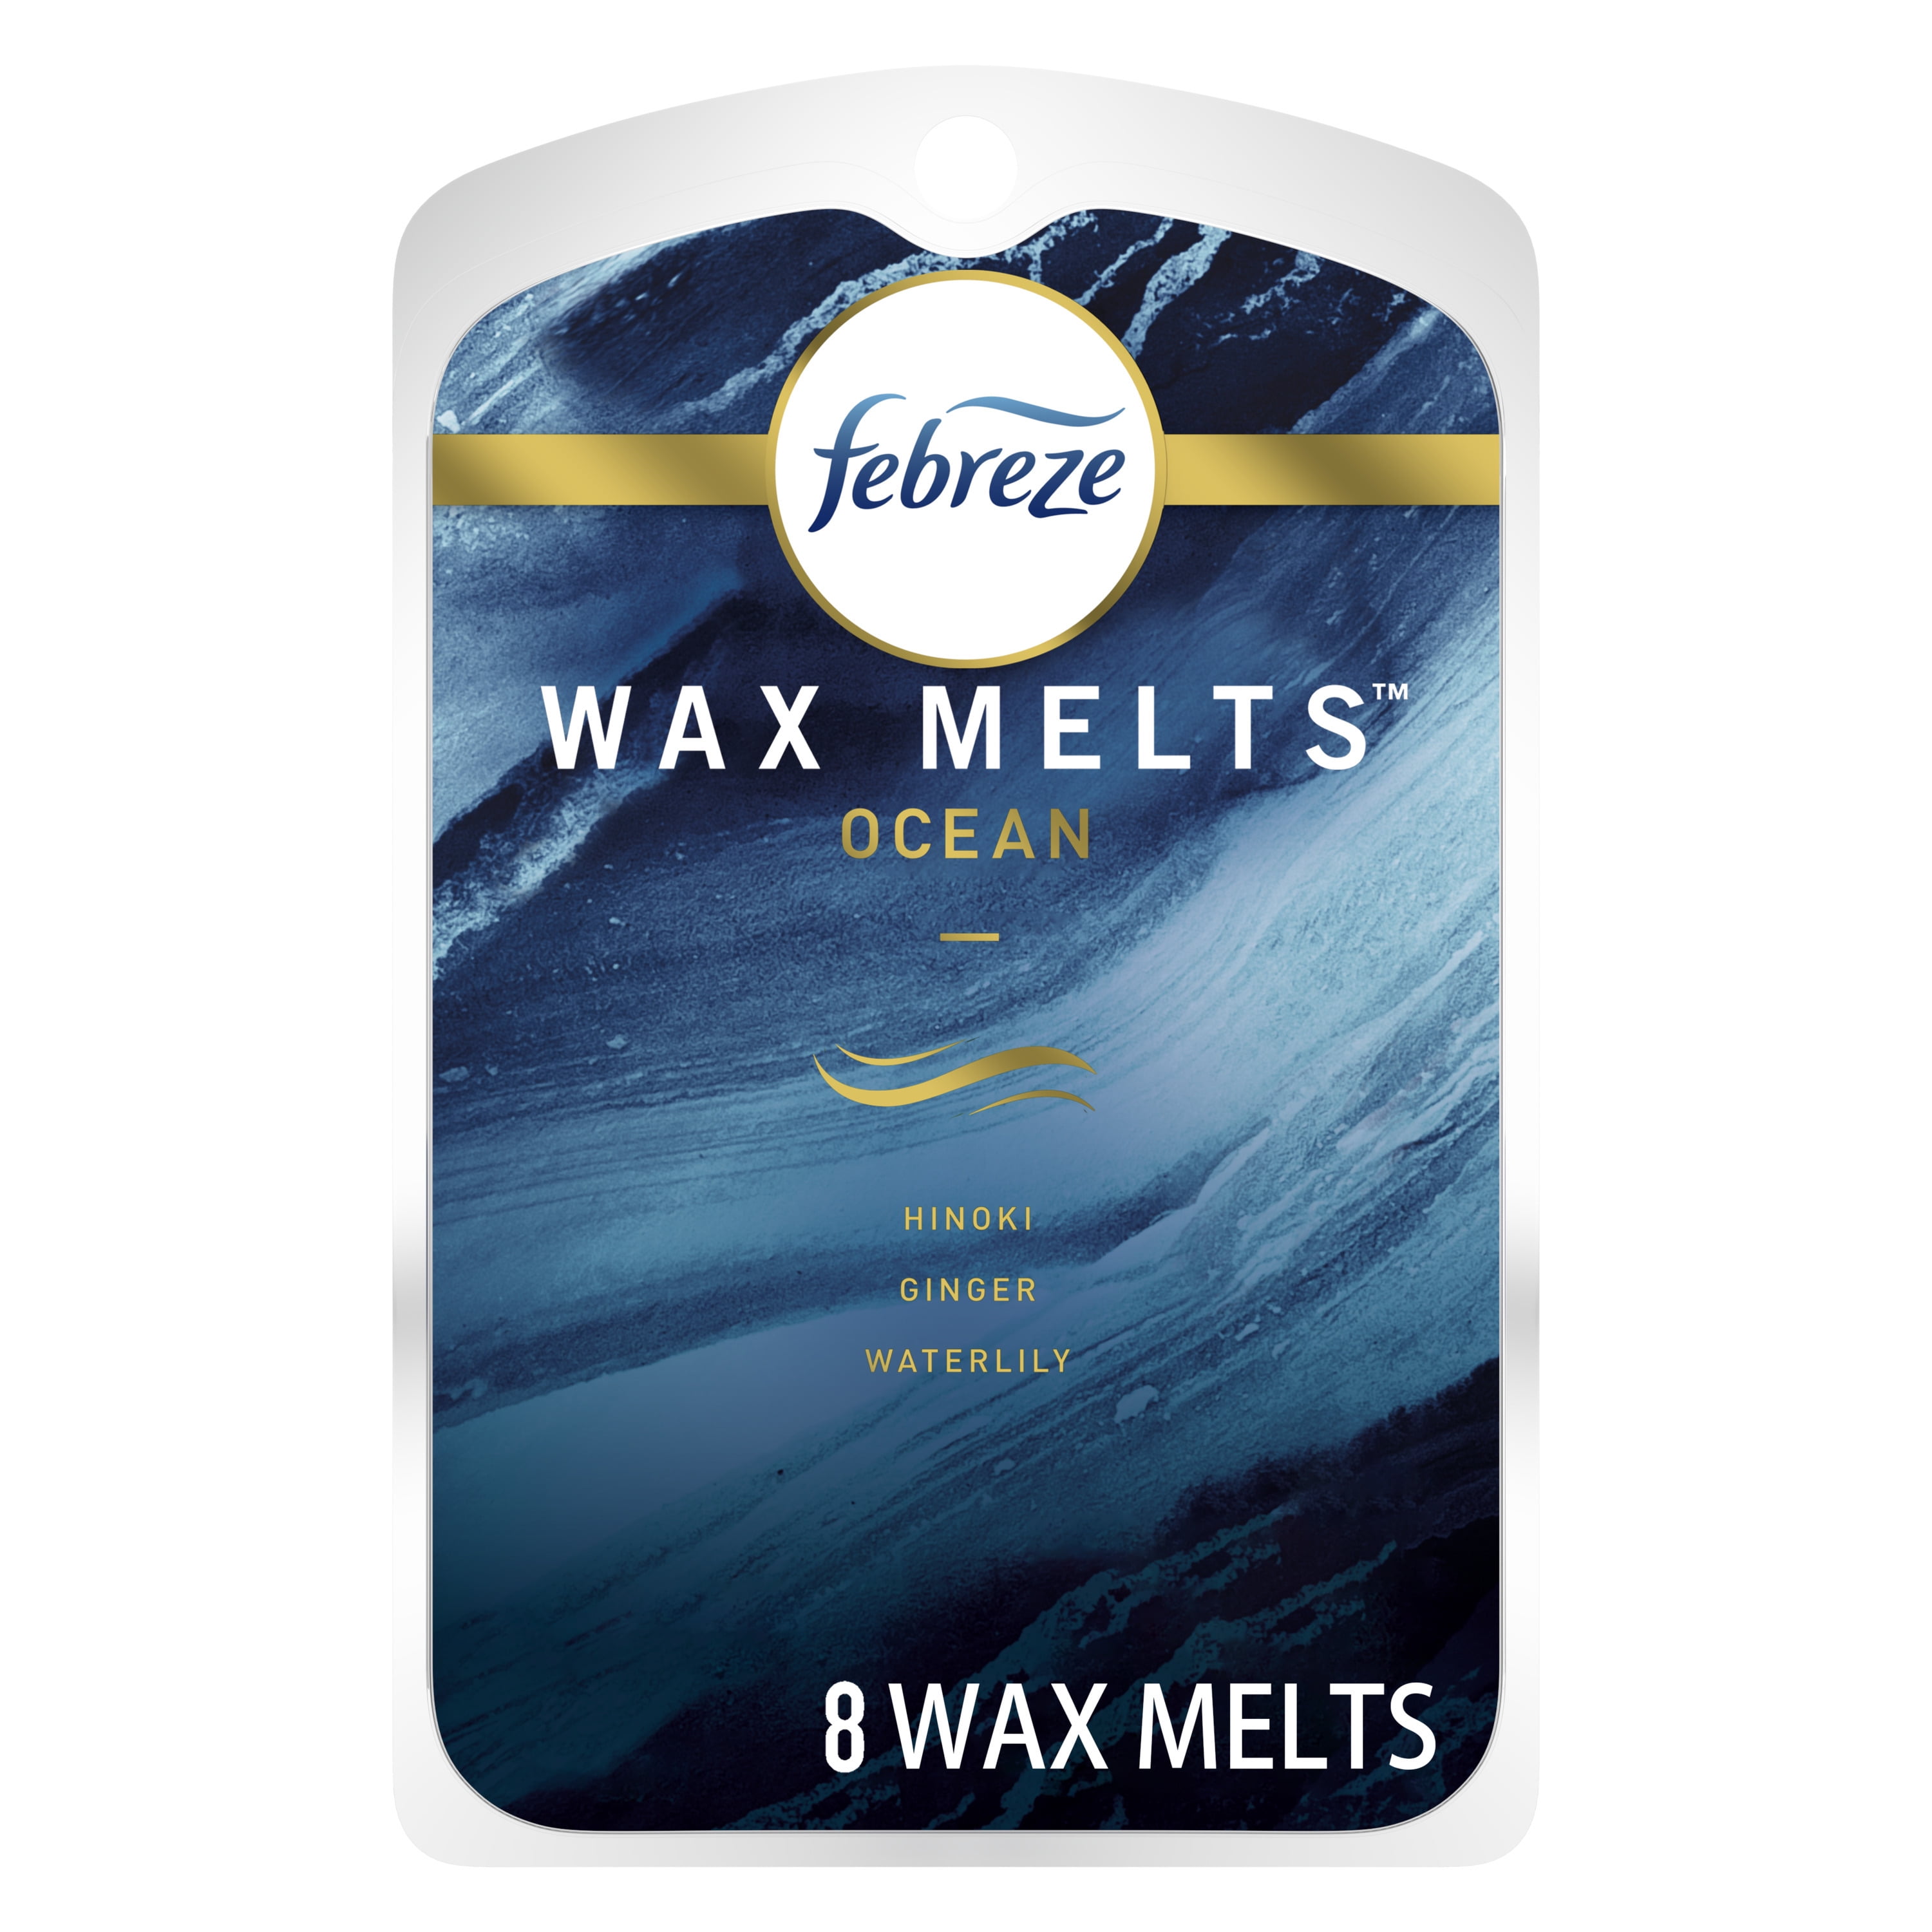 Febreze Wax Melts Warmer Air Freshener